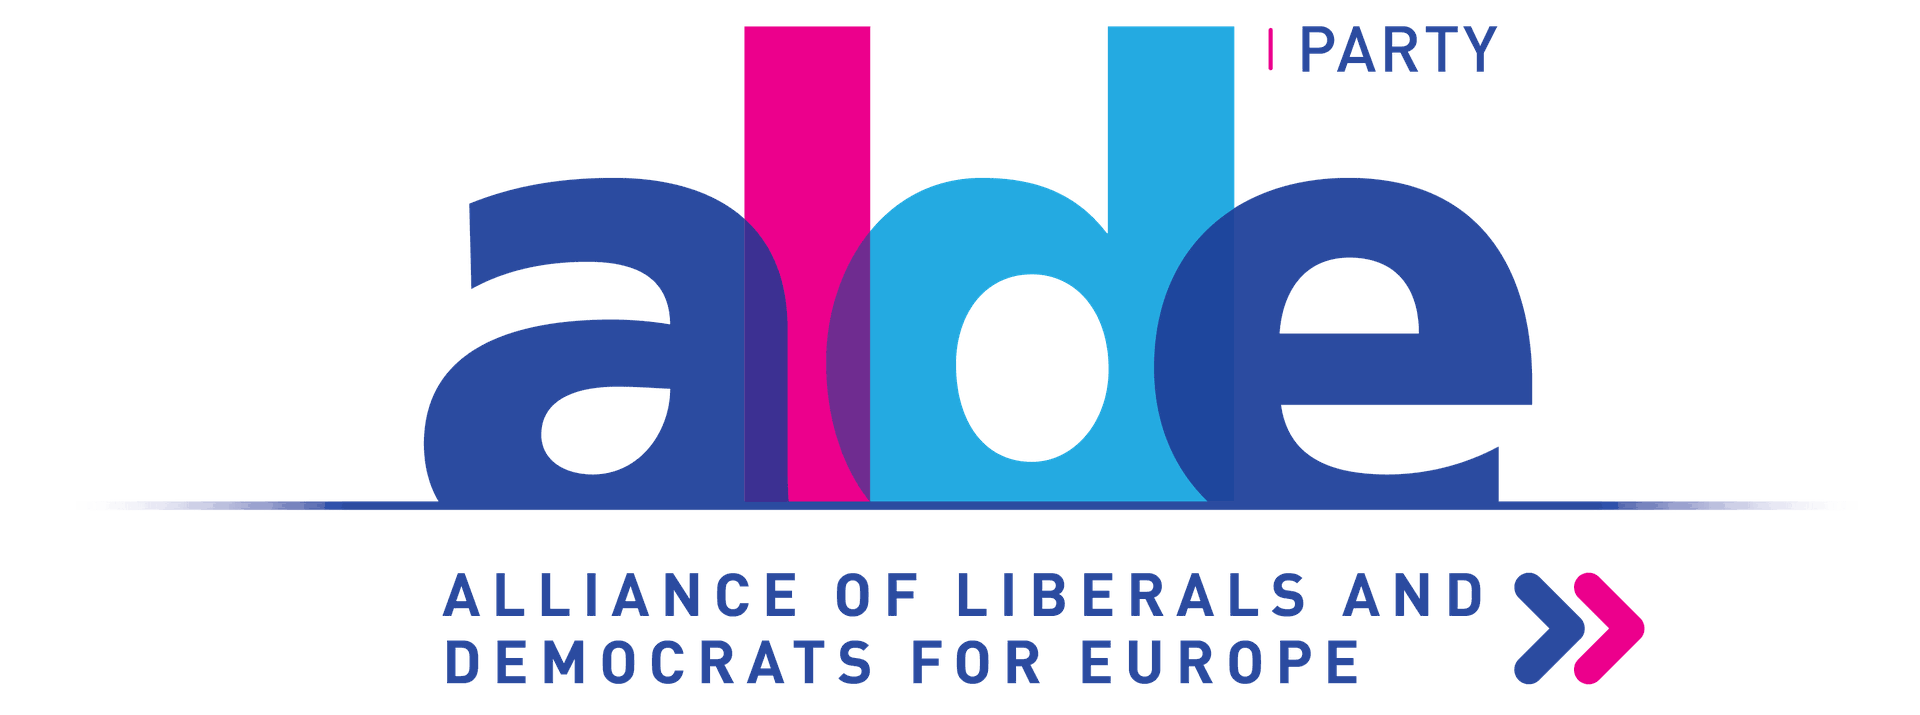 ALDE Party Events